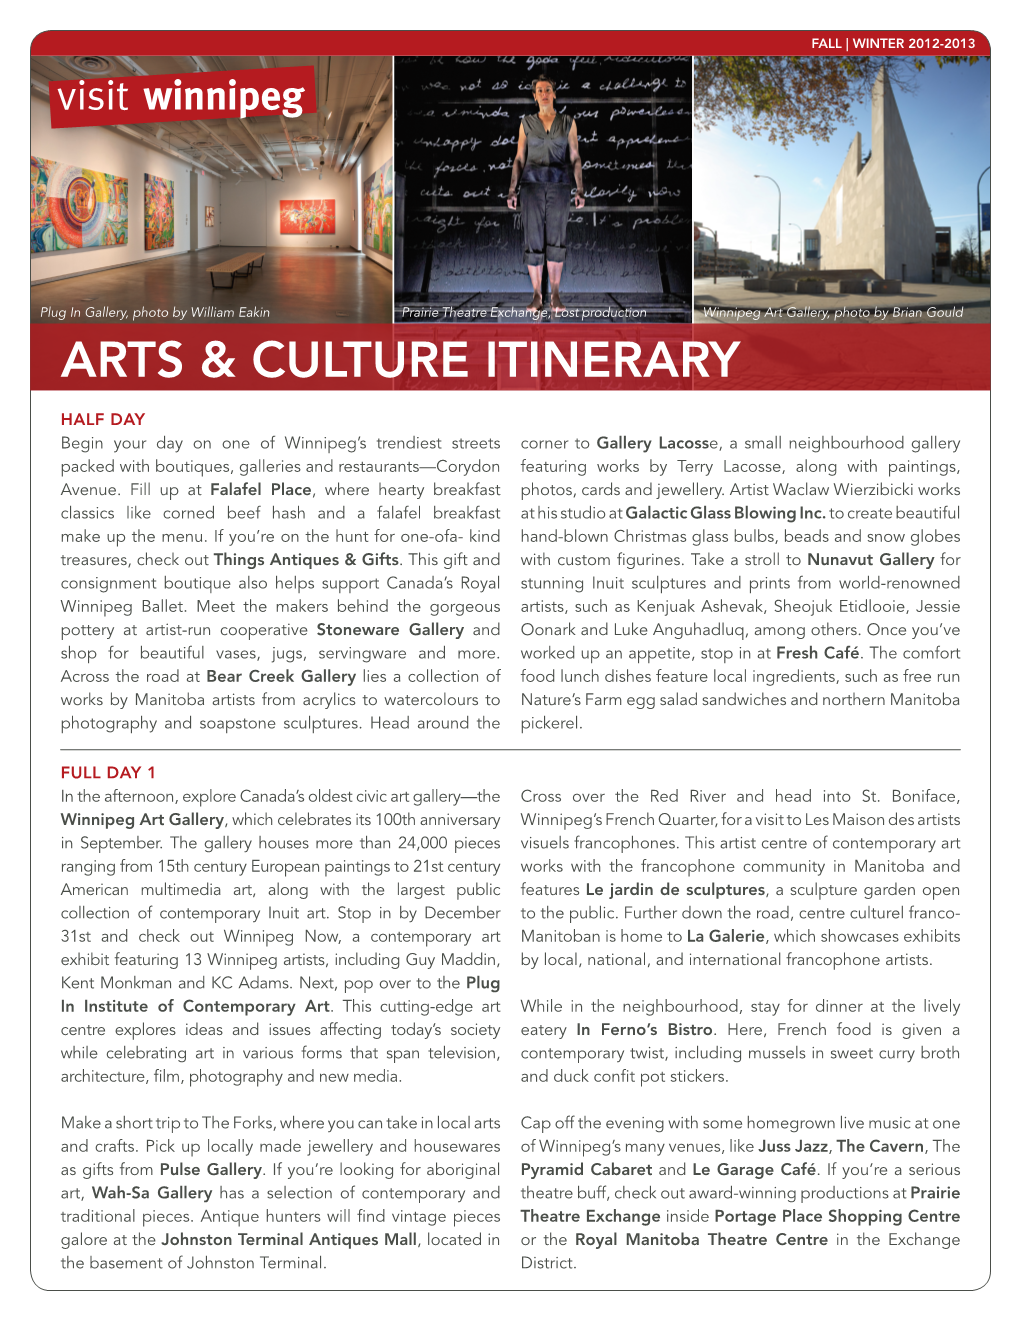 Arts & Culture Itinerary